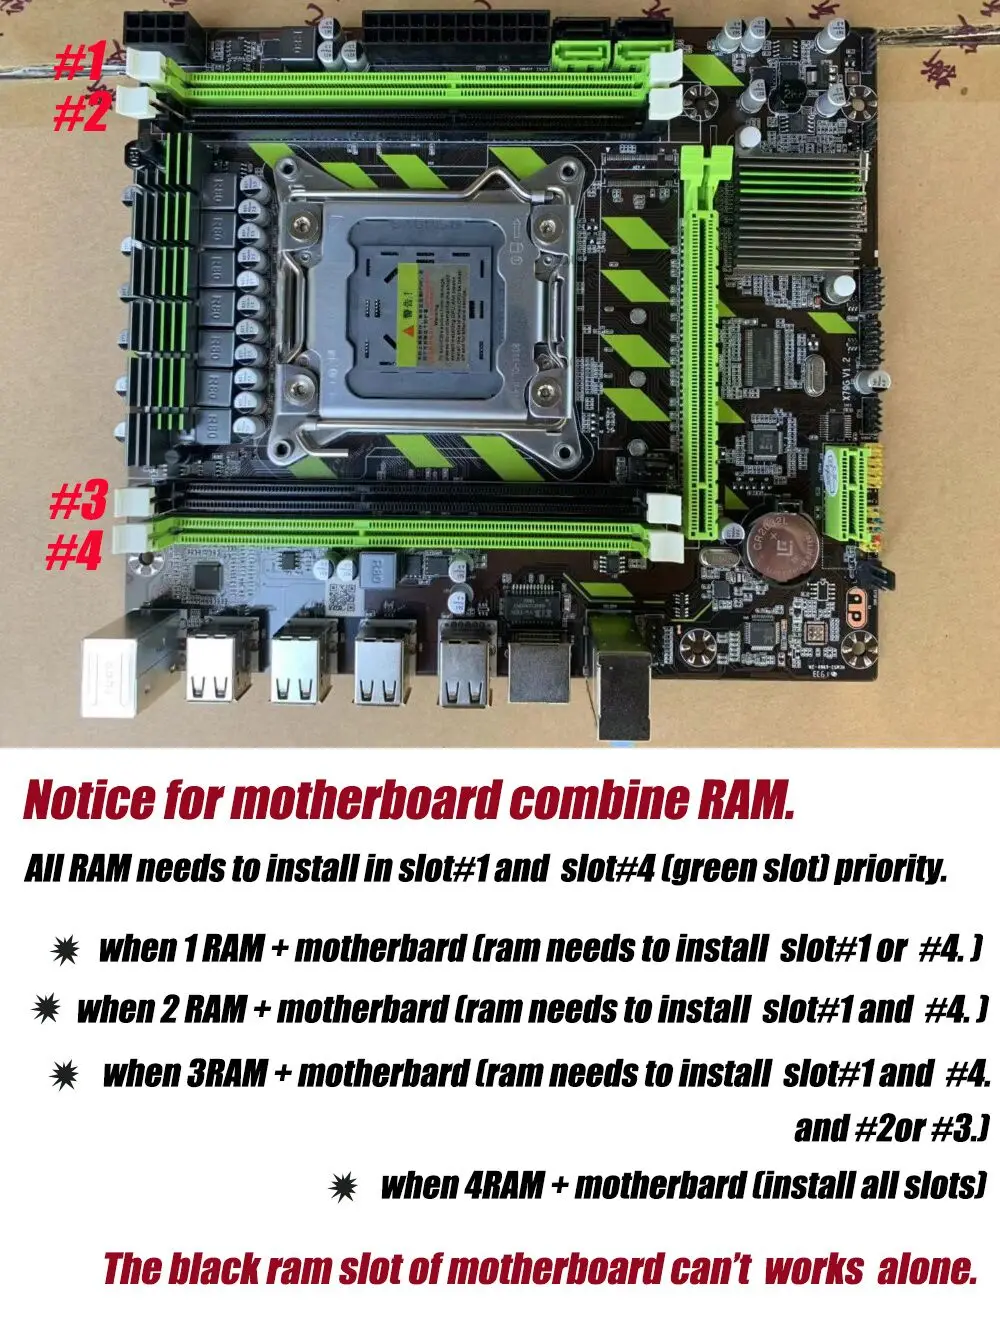 Atermiter X79 X79G материнская плата LGA2011 mini-ATX combos E5 2650V2 cpu 4 шт x 4 ГБ = 16 ГБ DDR3 ram 1600 МГц PC3 12800R